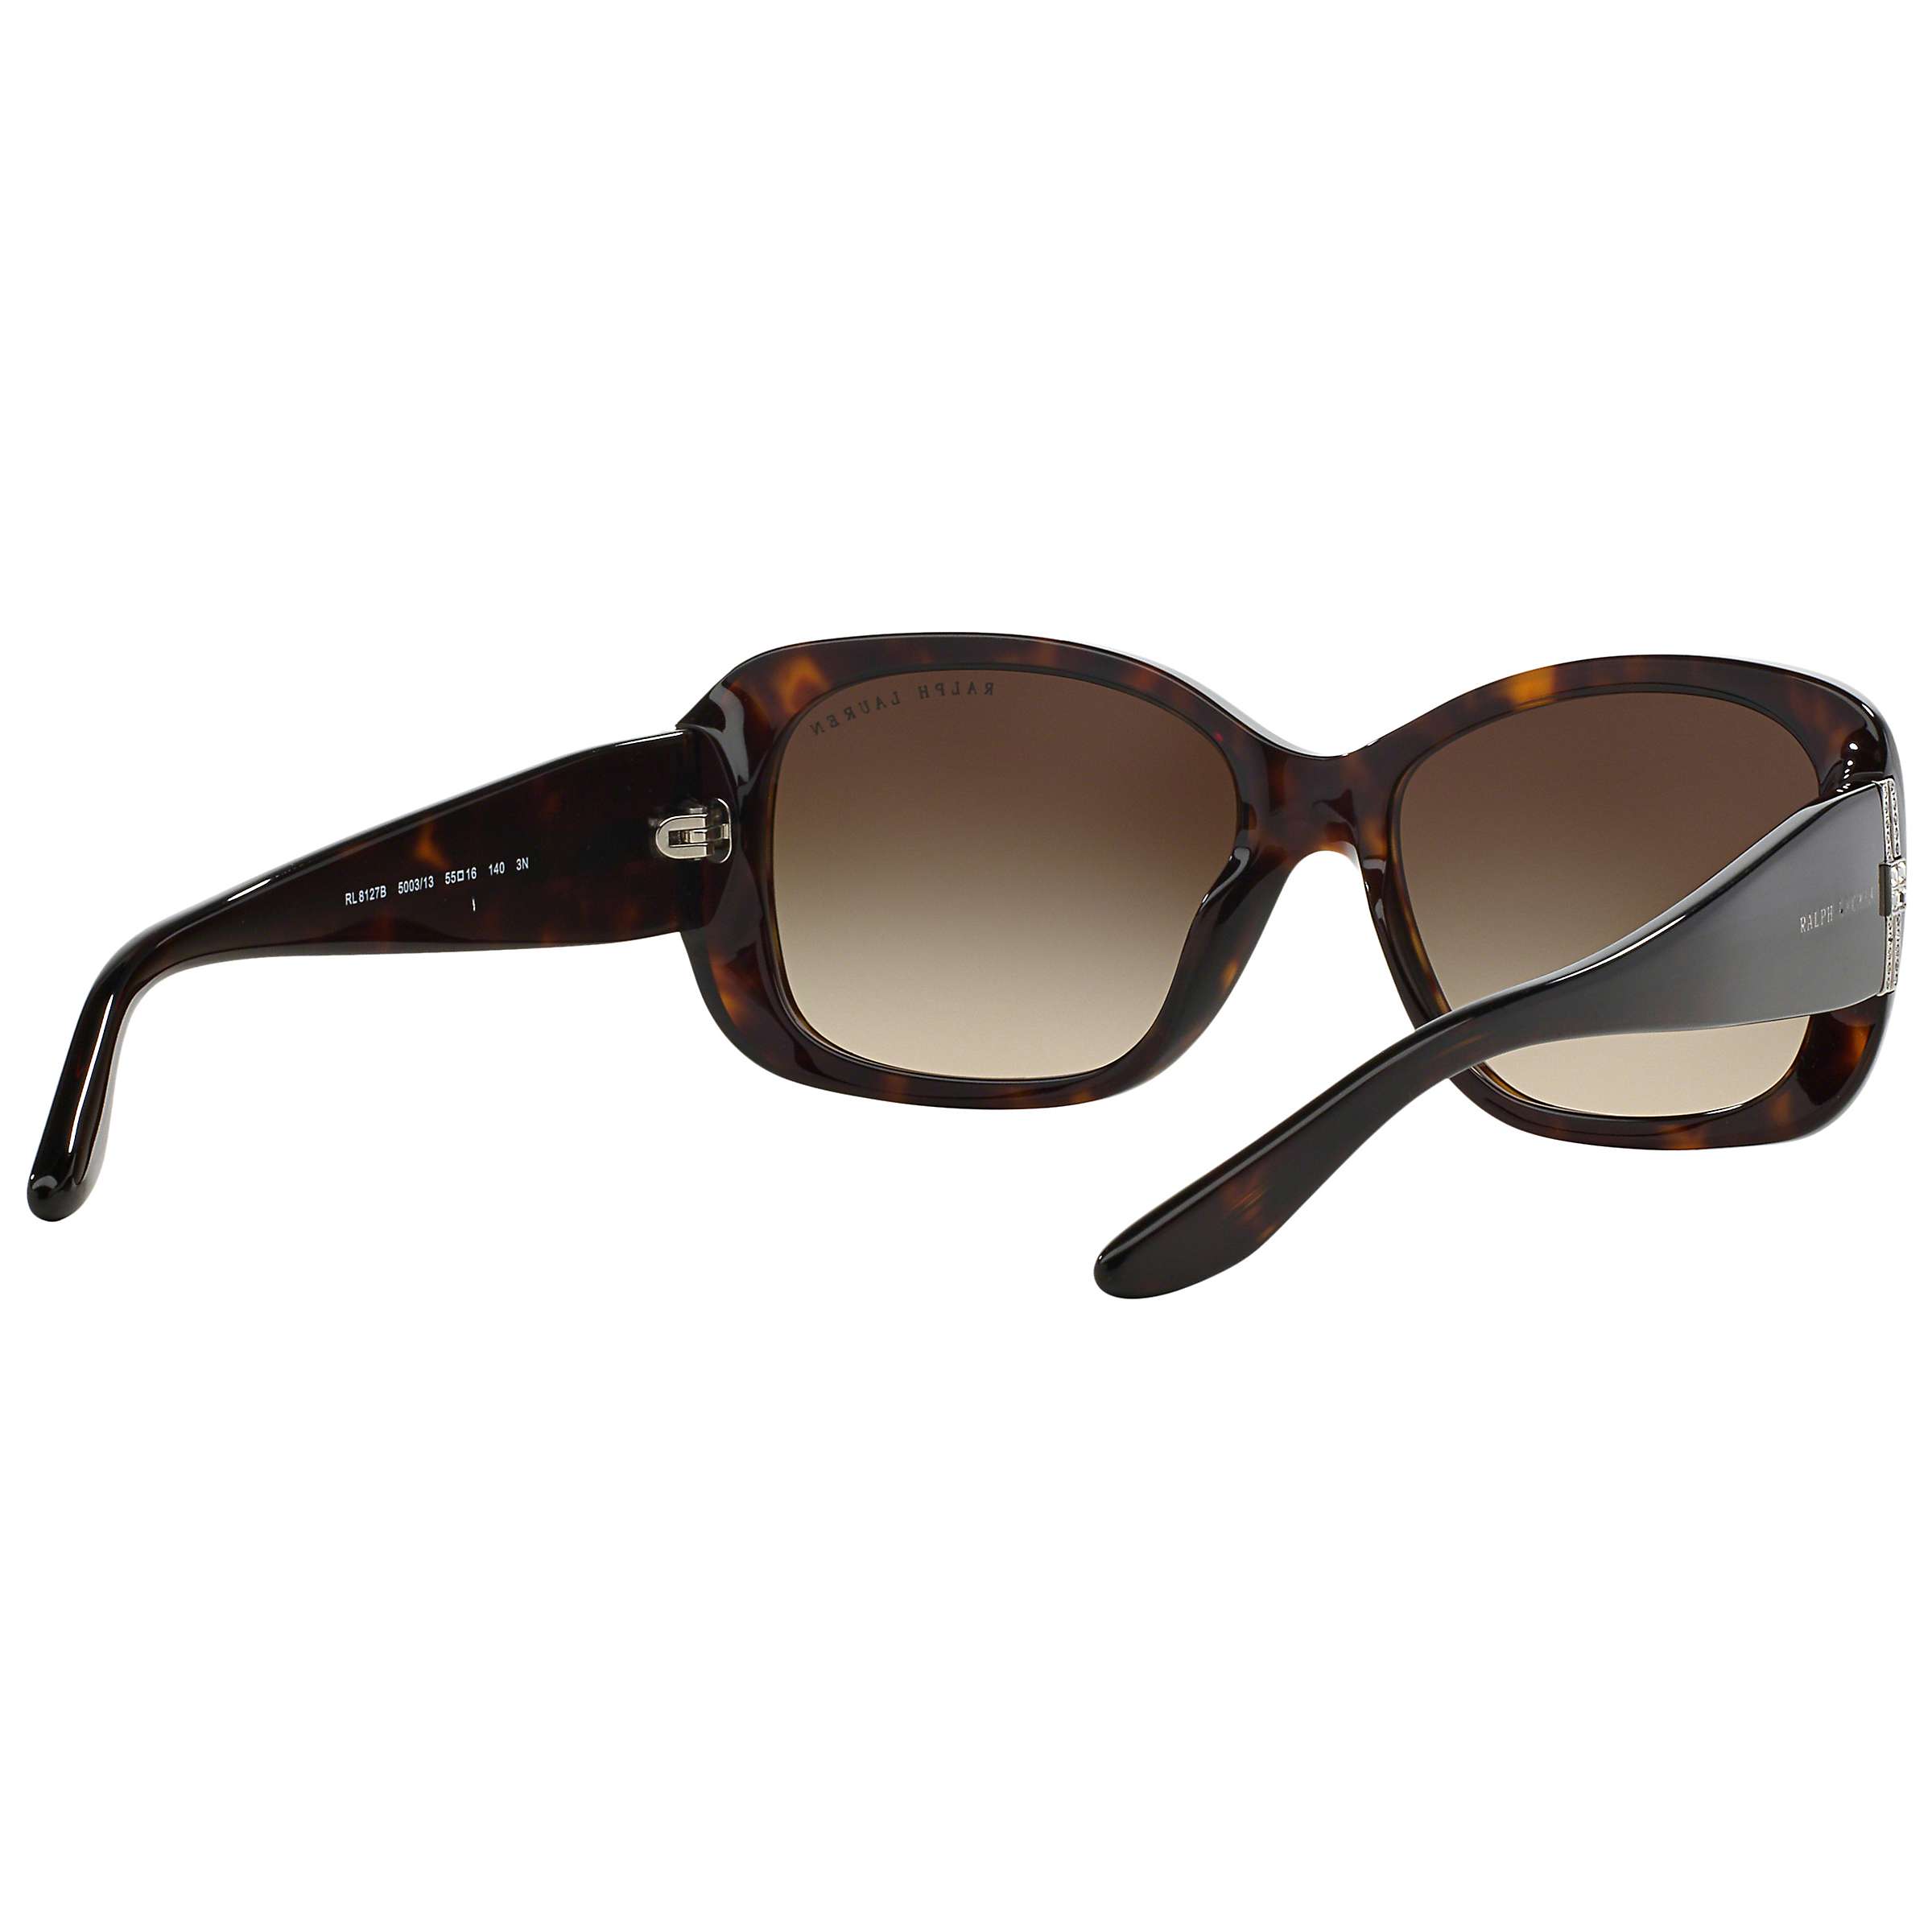 Buy Ralph Lauren RL8127B Rectangular Sunglasses, Dark Havana Online at johnlewis.com